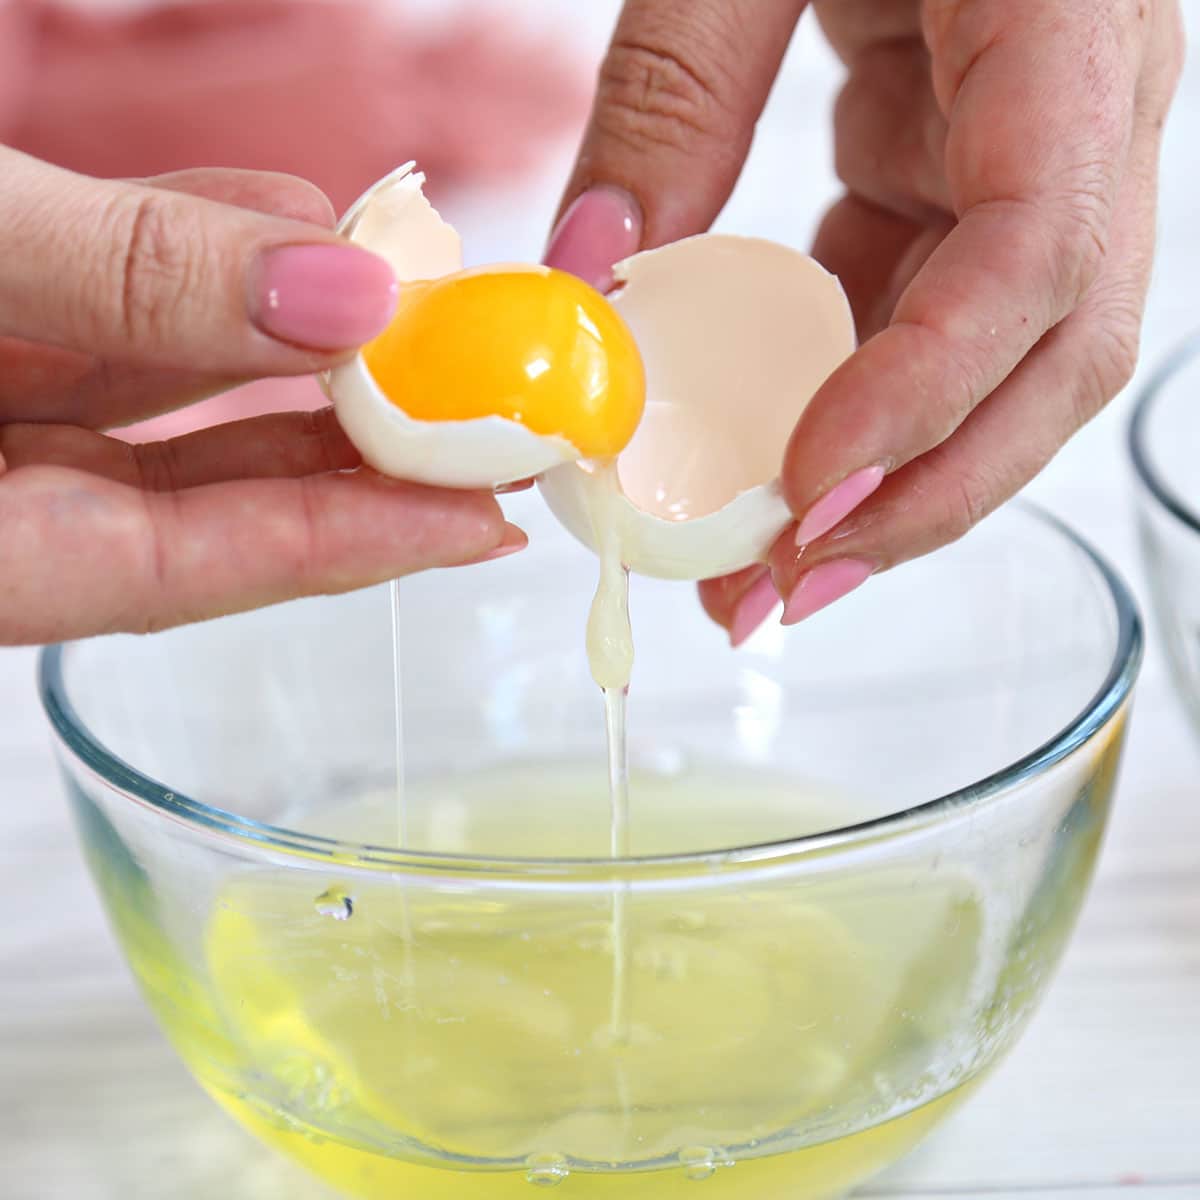 Hands using an eggshell to separate egg yolks from egg whites.